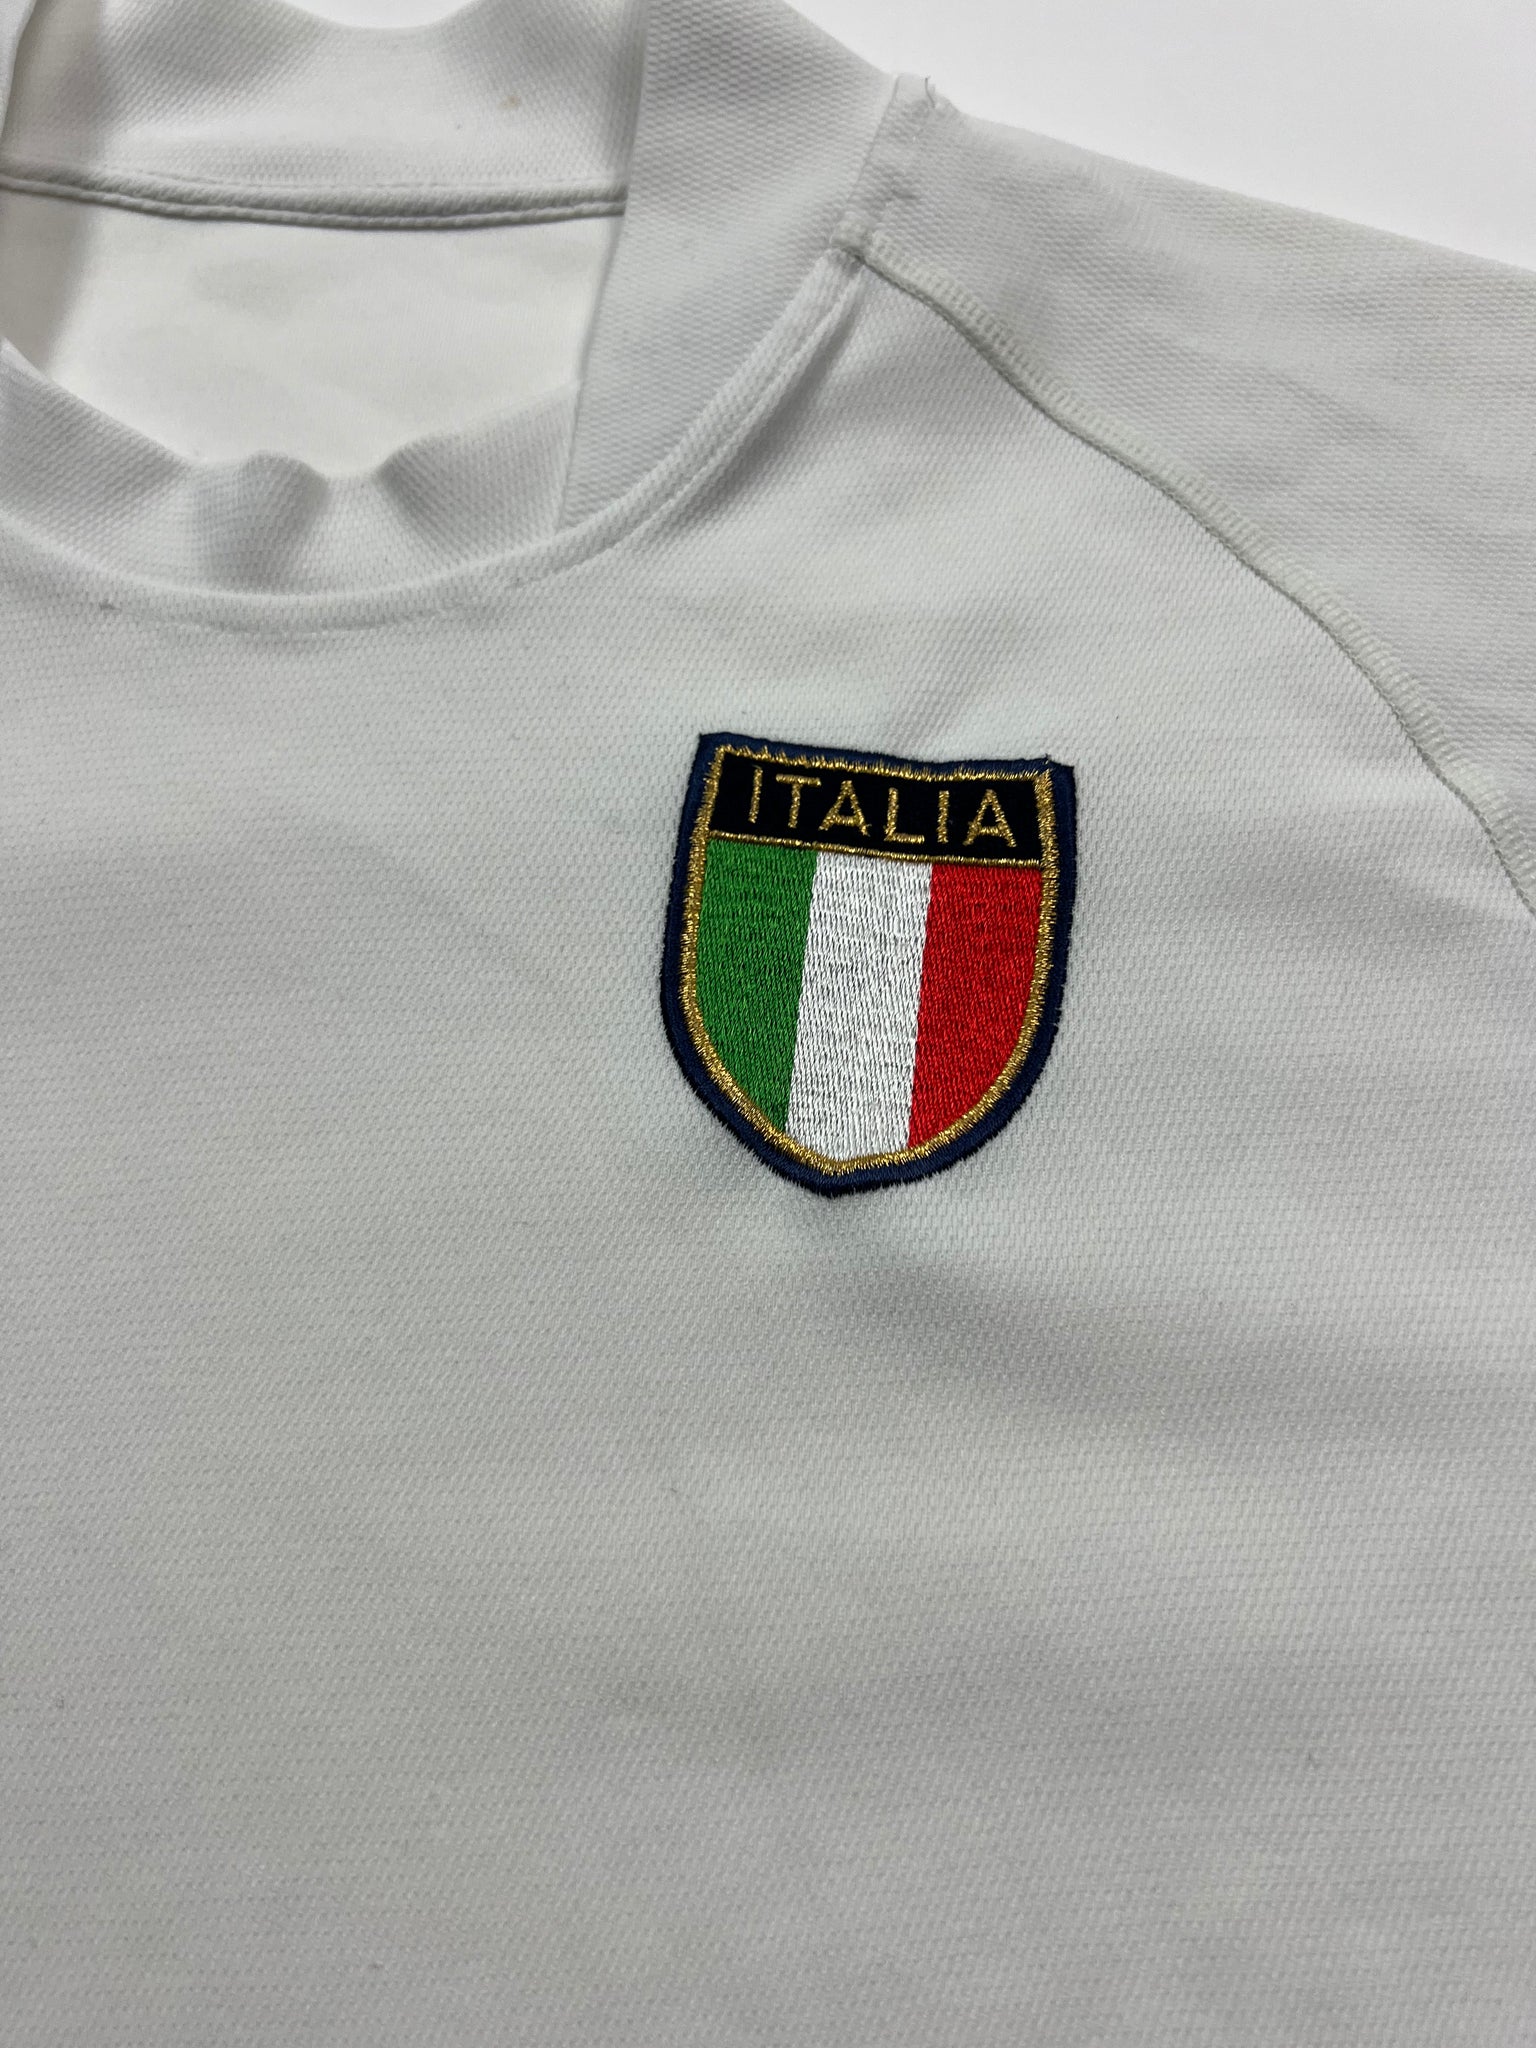 Kappa Italy Jersey (M)